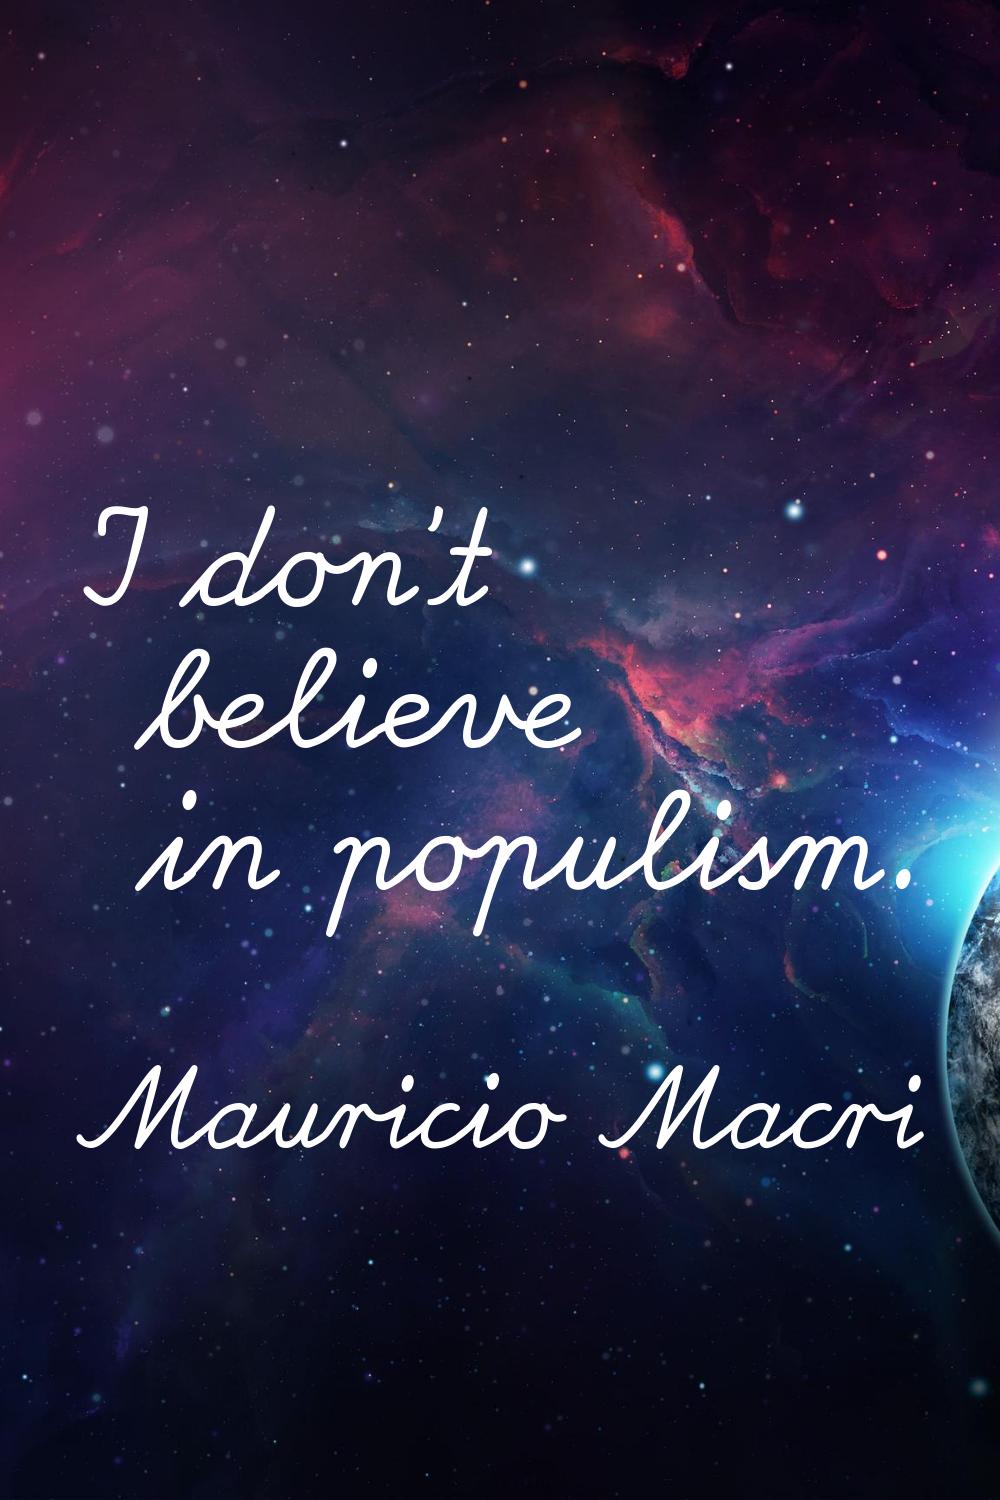 I don't believe in populism.